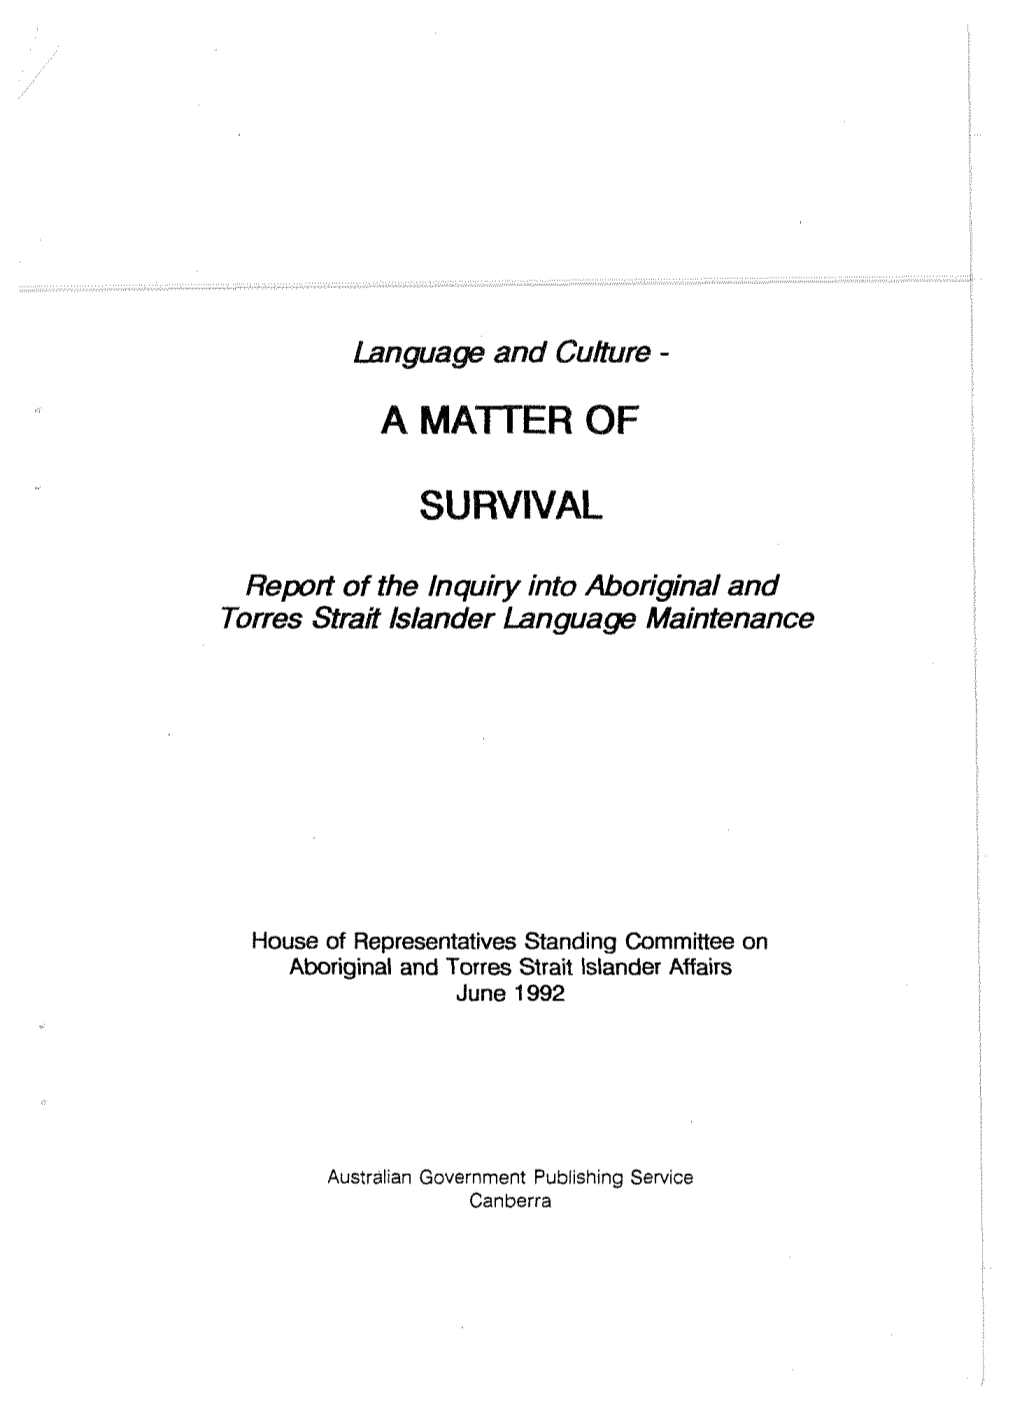 Report of the Inquiry Into Aboriginal and Torres Strait Islander Language Maintenance